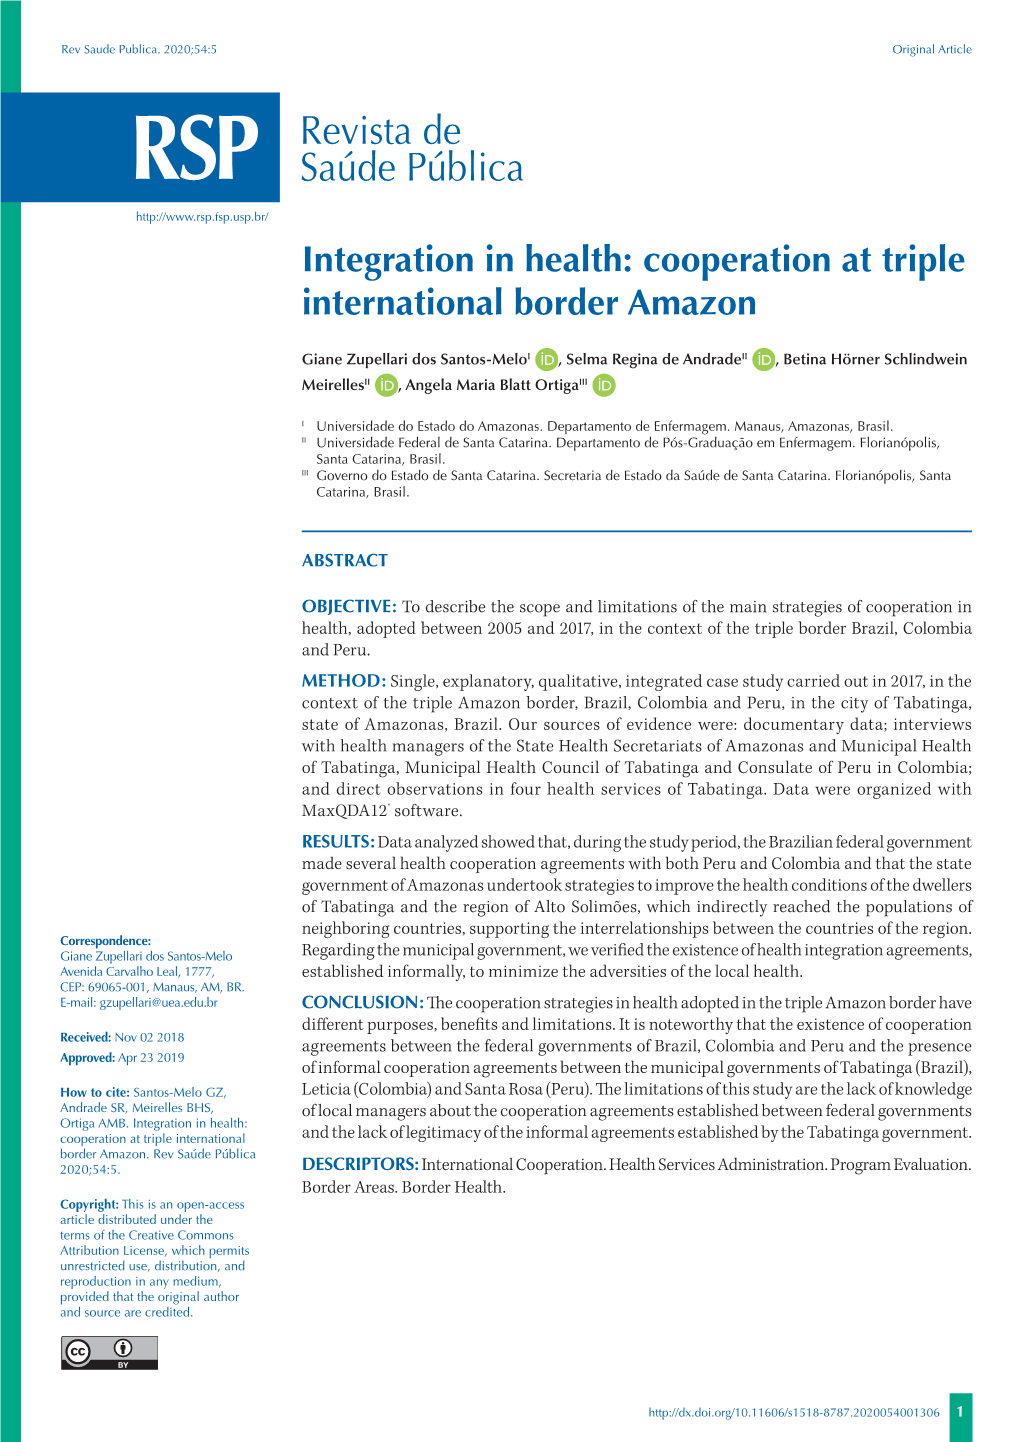 Integration in Health: Cooperation at Triple International Border Amazon